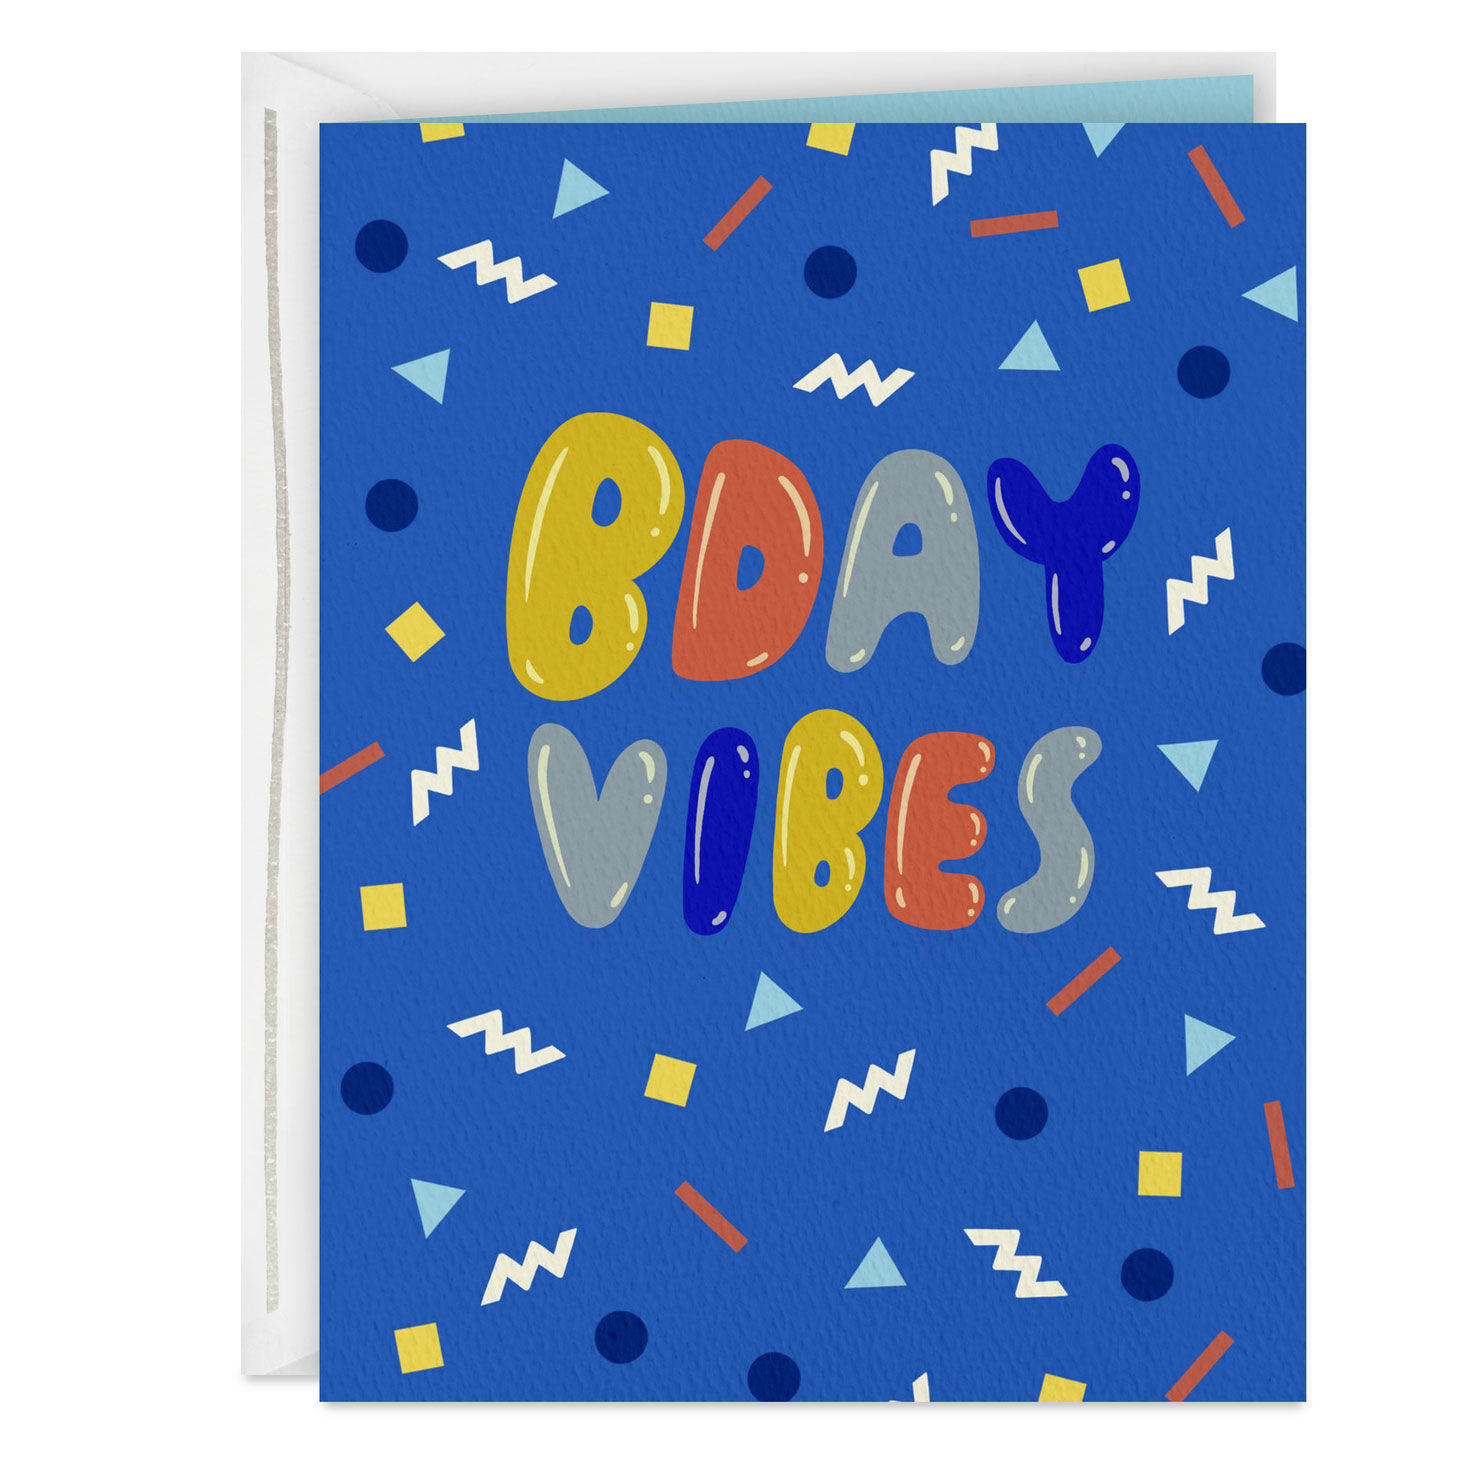 Bday Vibes Birthday Card for only USD 3.99 | Hallmark